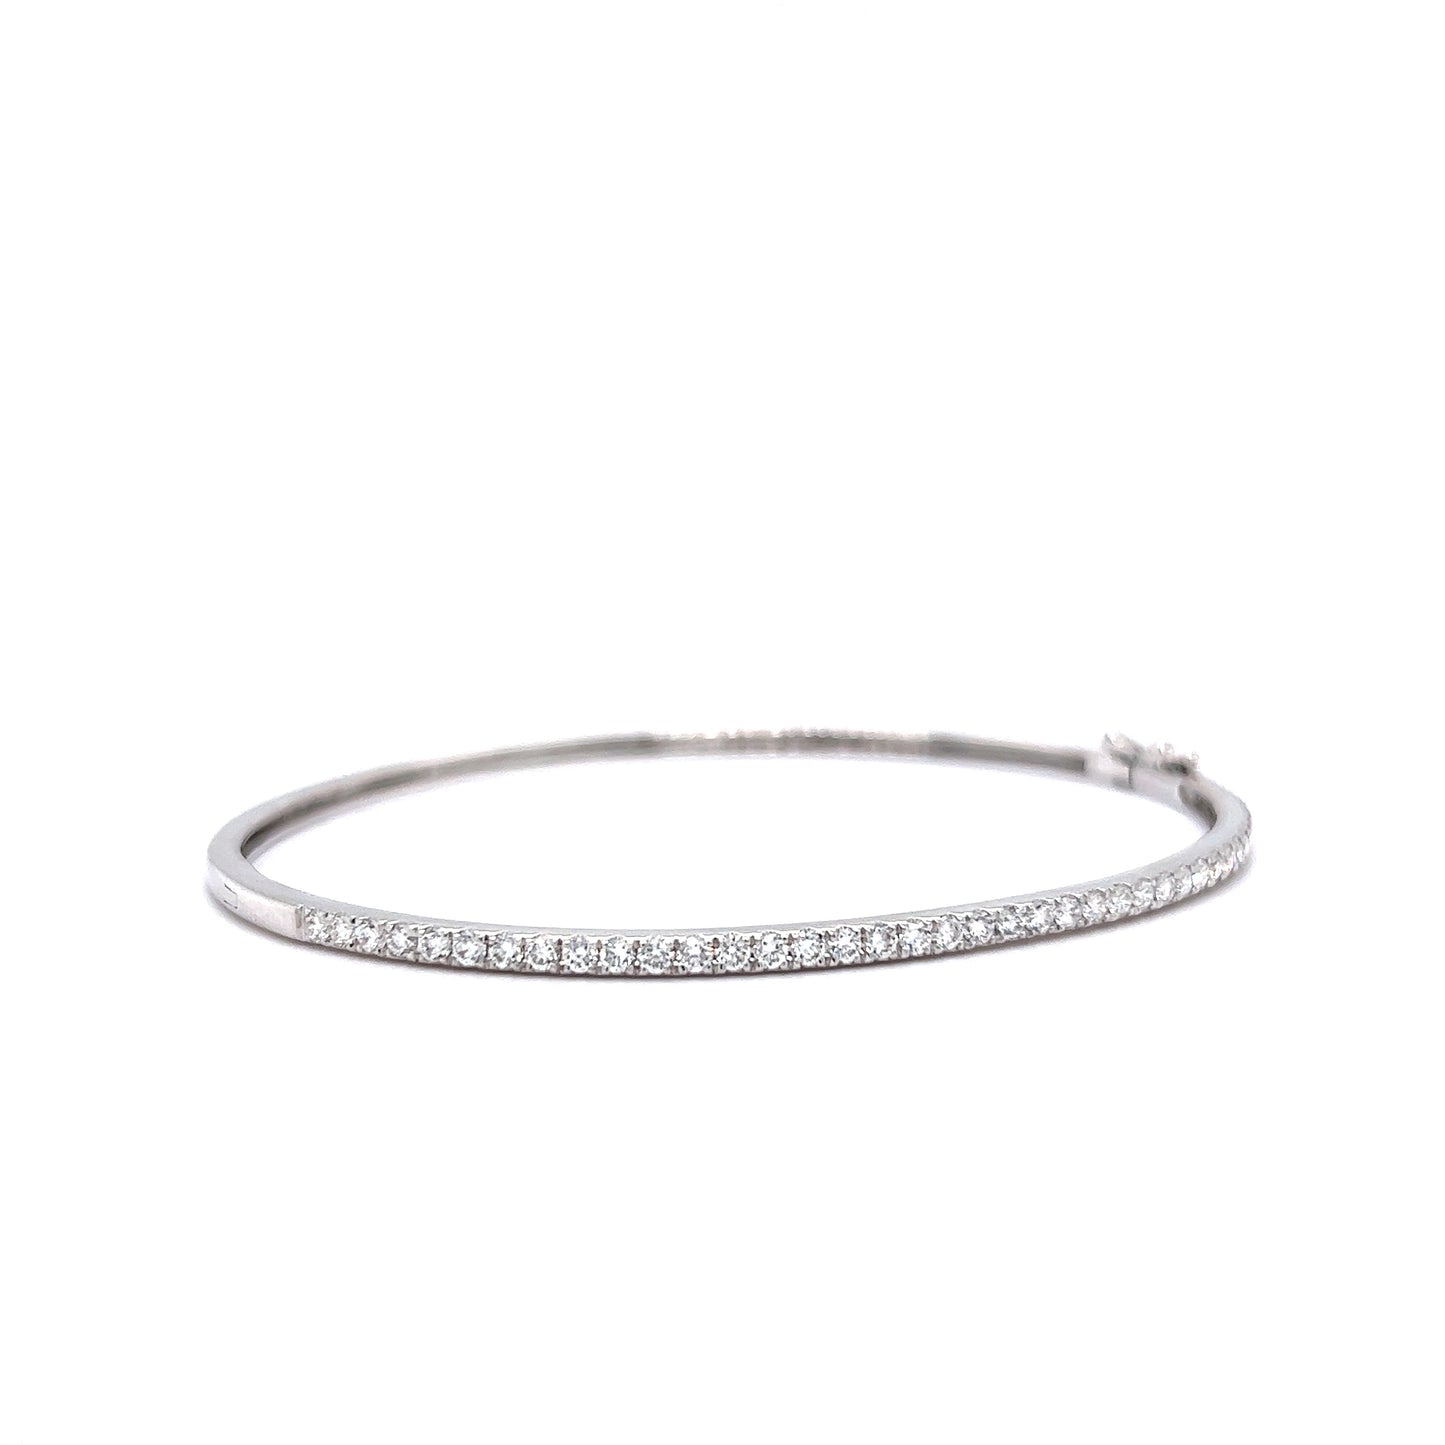 1.00 Carat Diamond Tennis Bracelet in 18k White Gold